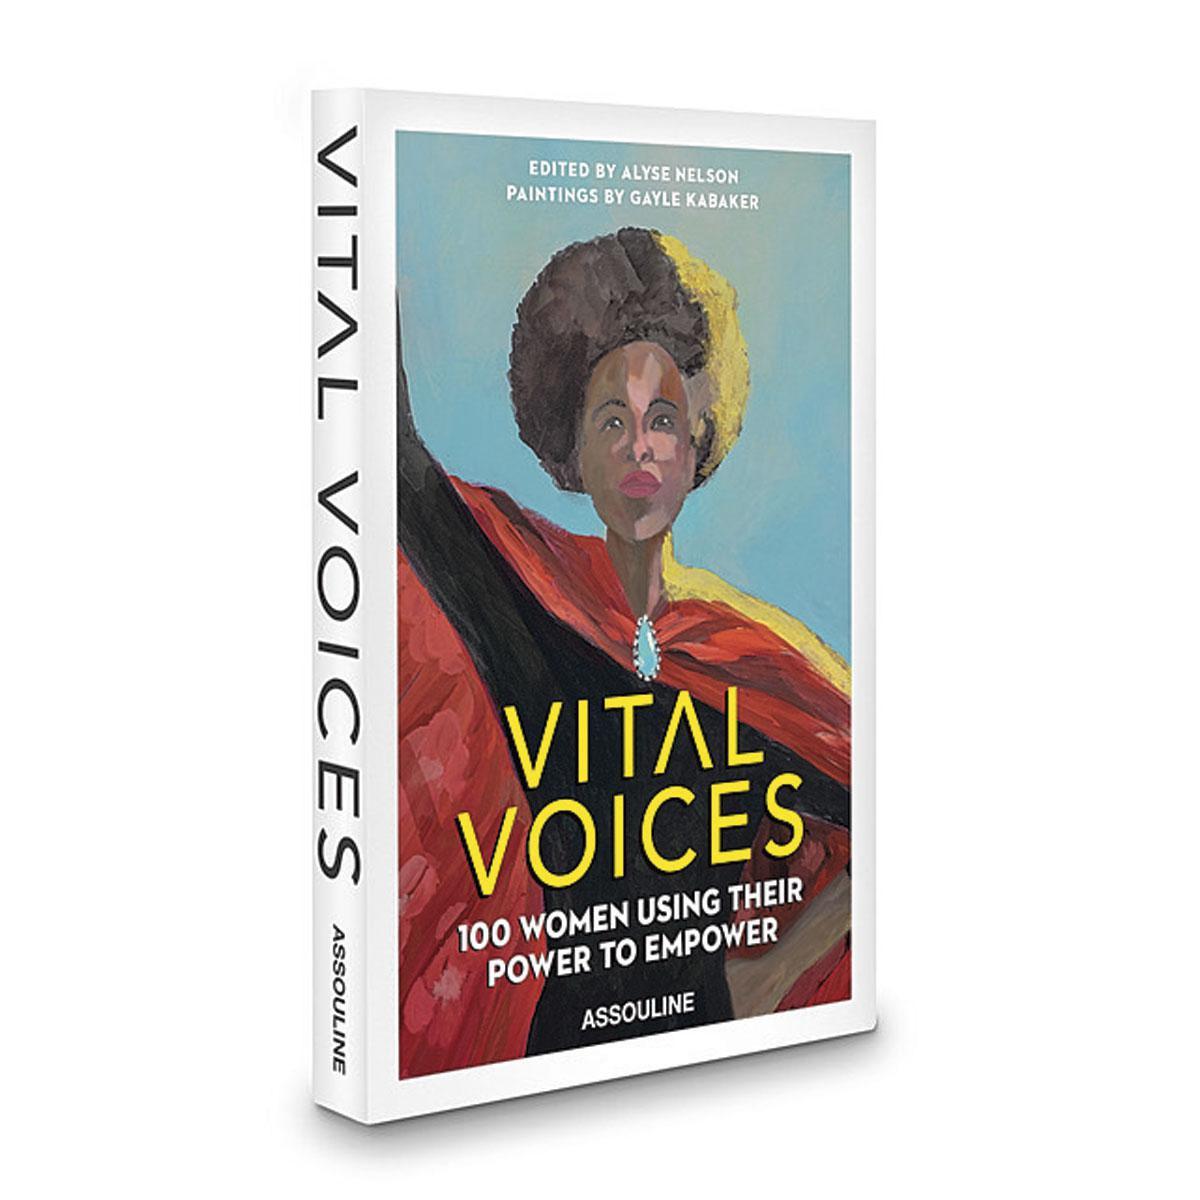 Vital Voices : 100 Women Using Their Power to Empower, par Alyse Nelson, illustrations de Gayle Kabaker (en anglais), Assouline, 220 p.